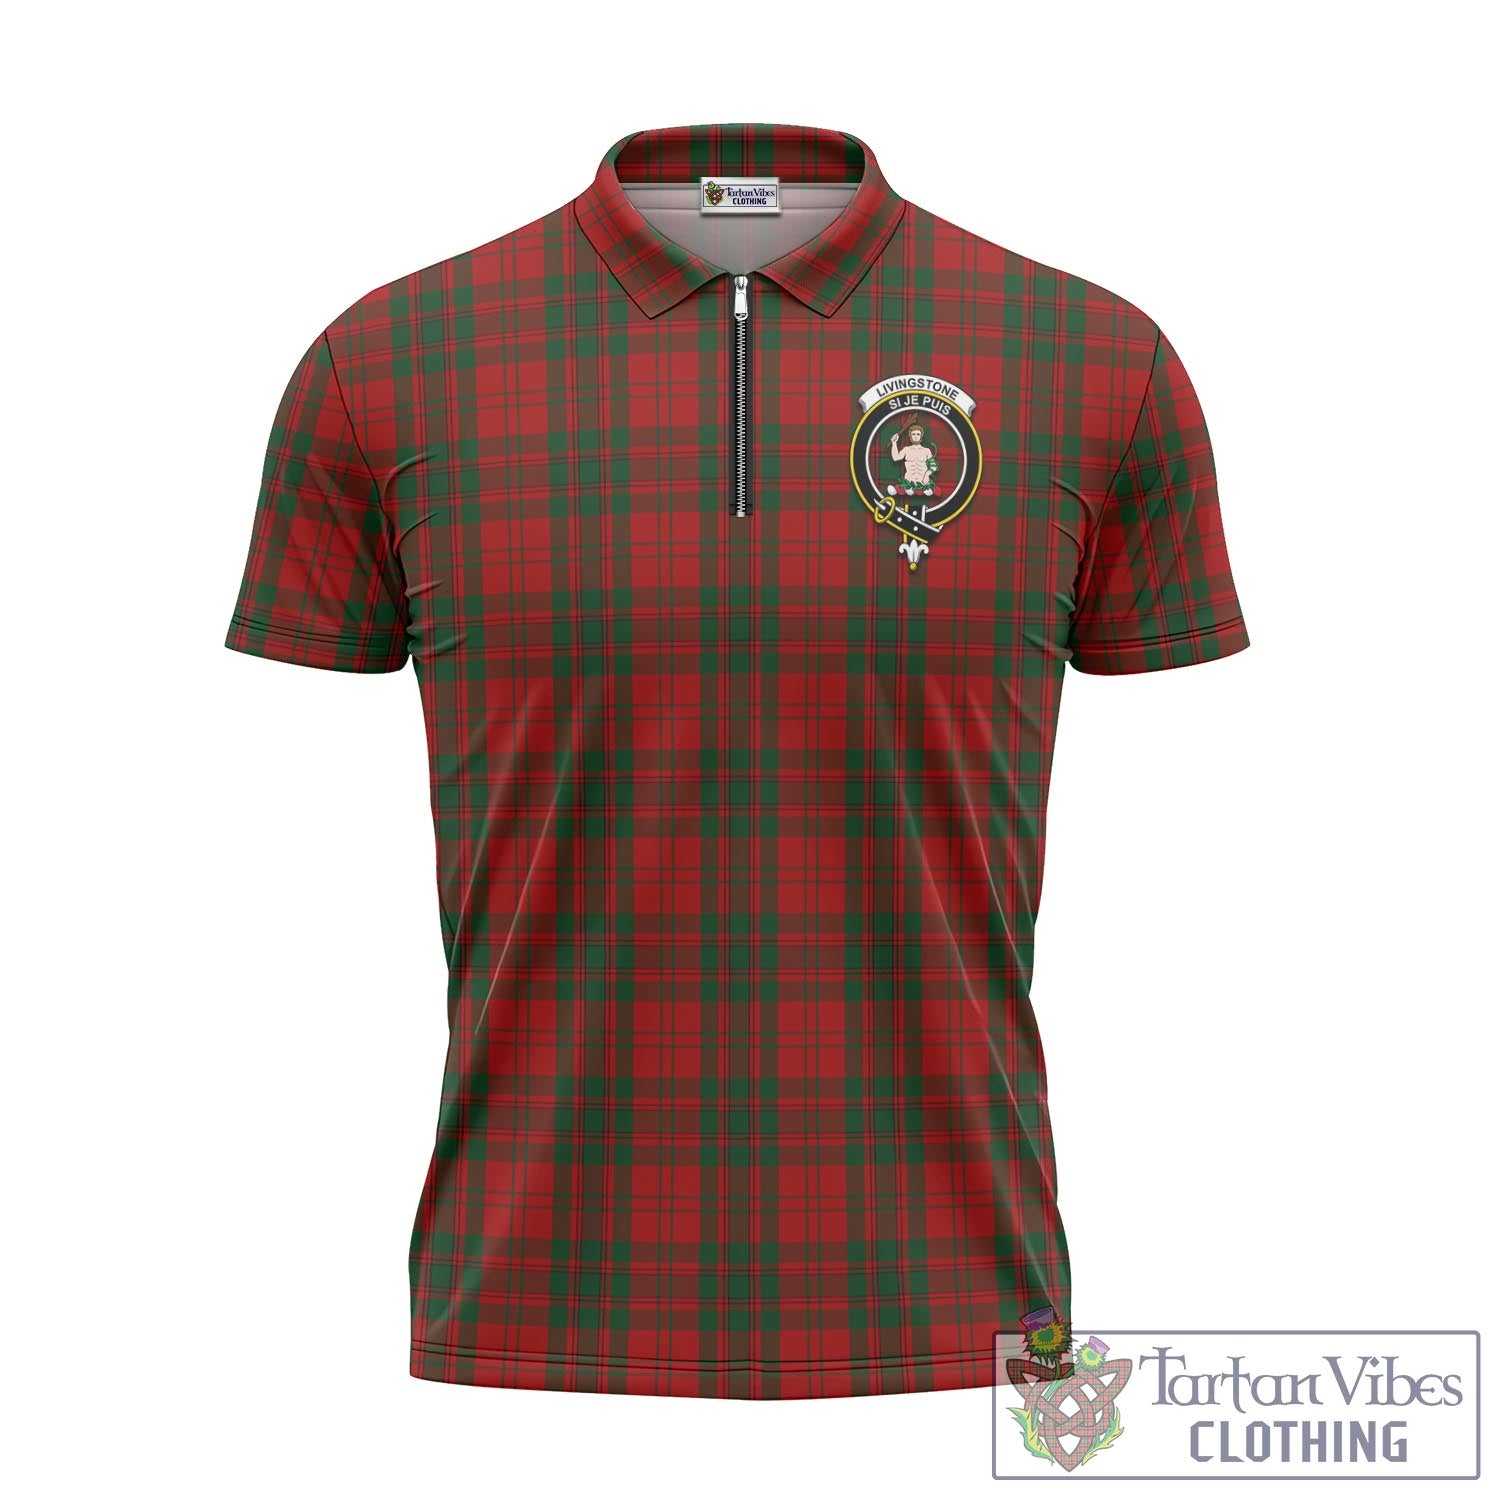 Tartan Vibes Clothing Livingston Tartan Zipper Polo Shirt with Family Crest